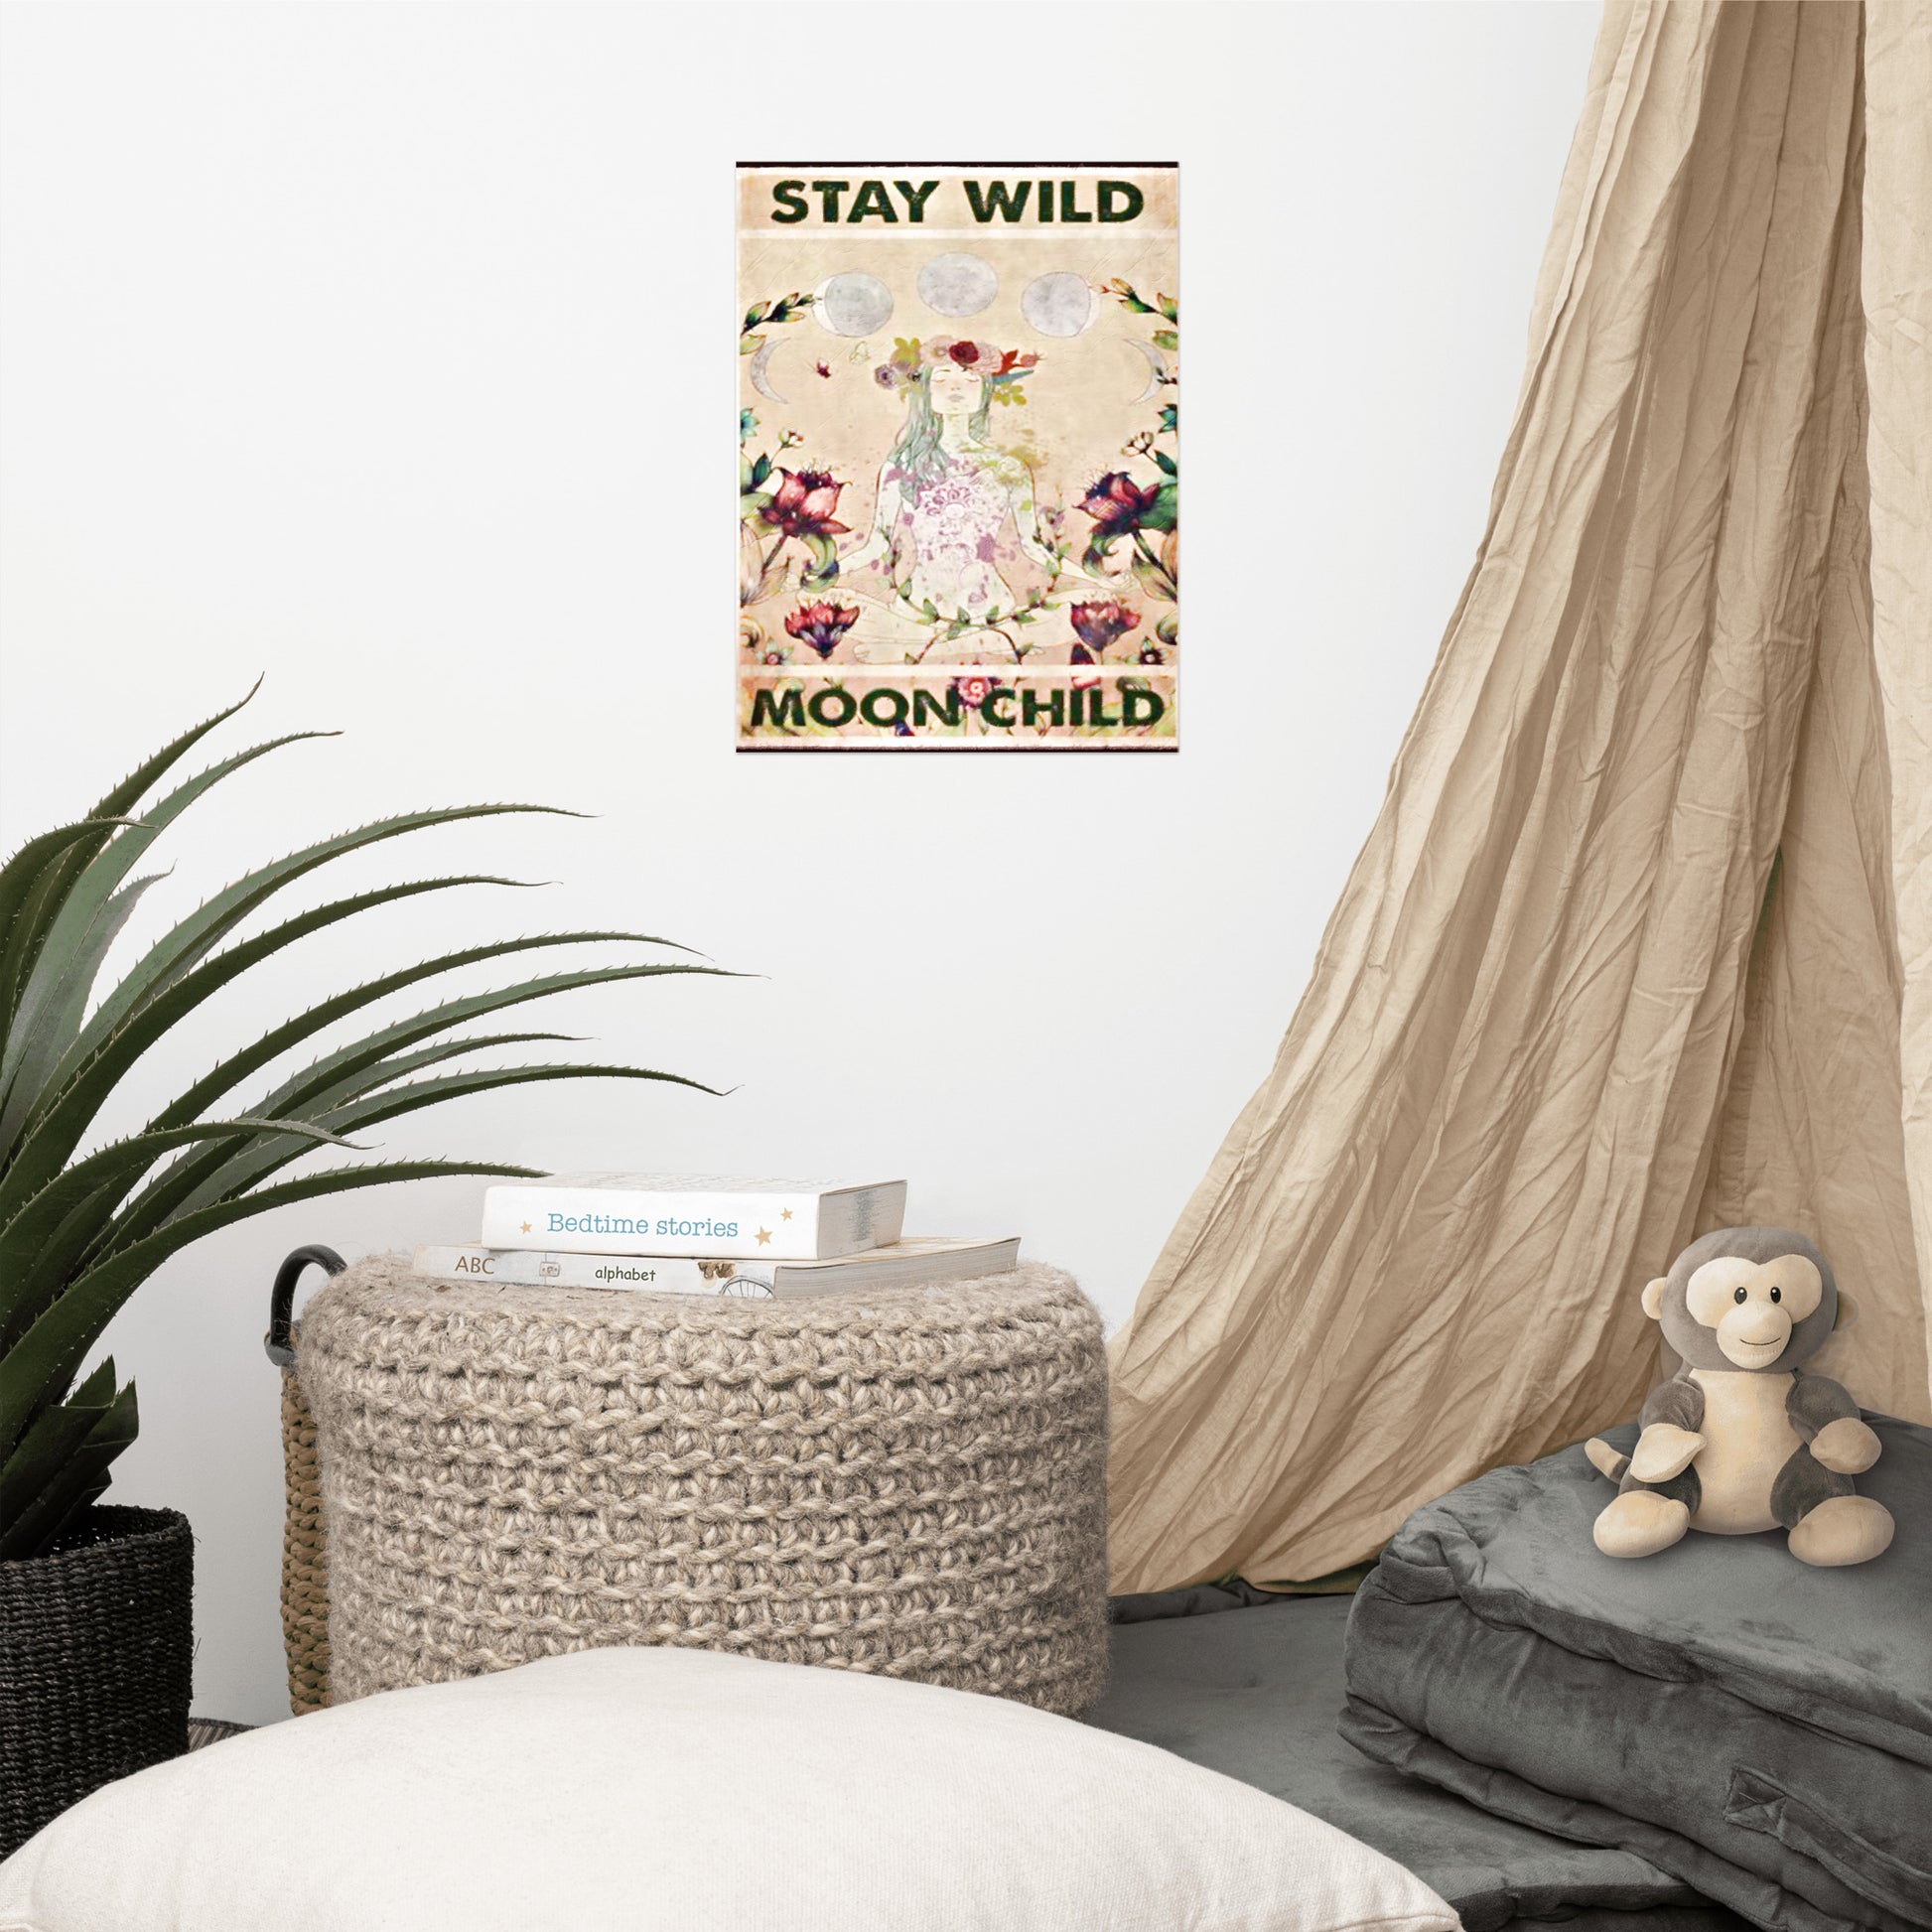 Matt Finish Poster - Stay Wild Moon Child - Yoga Poster on wall